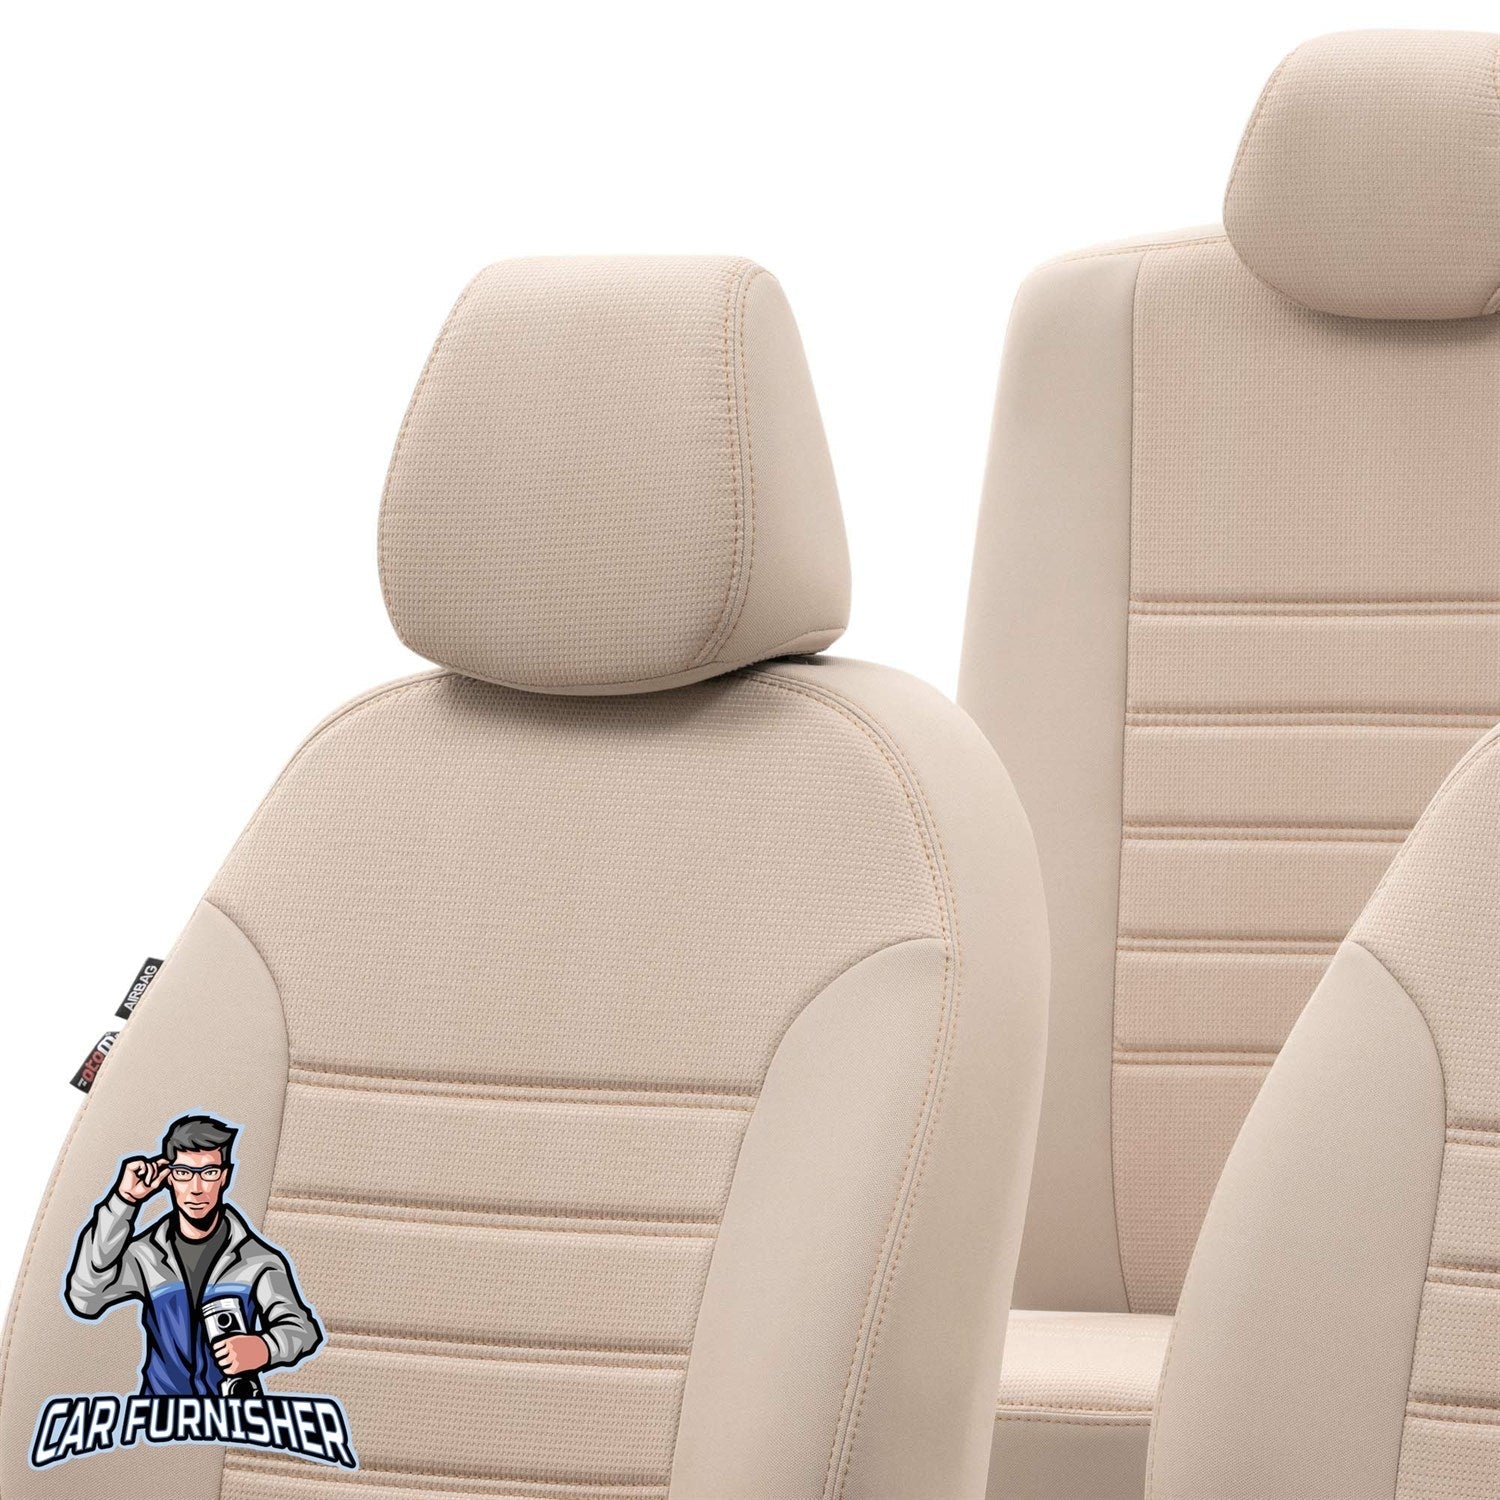 Peugeot 106 Seat Covers Original Jacquard Design Beige Jacquard Fabric